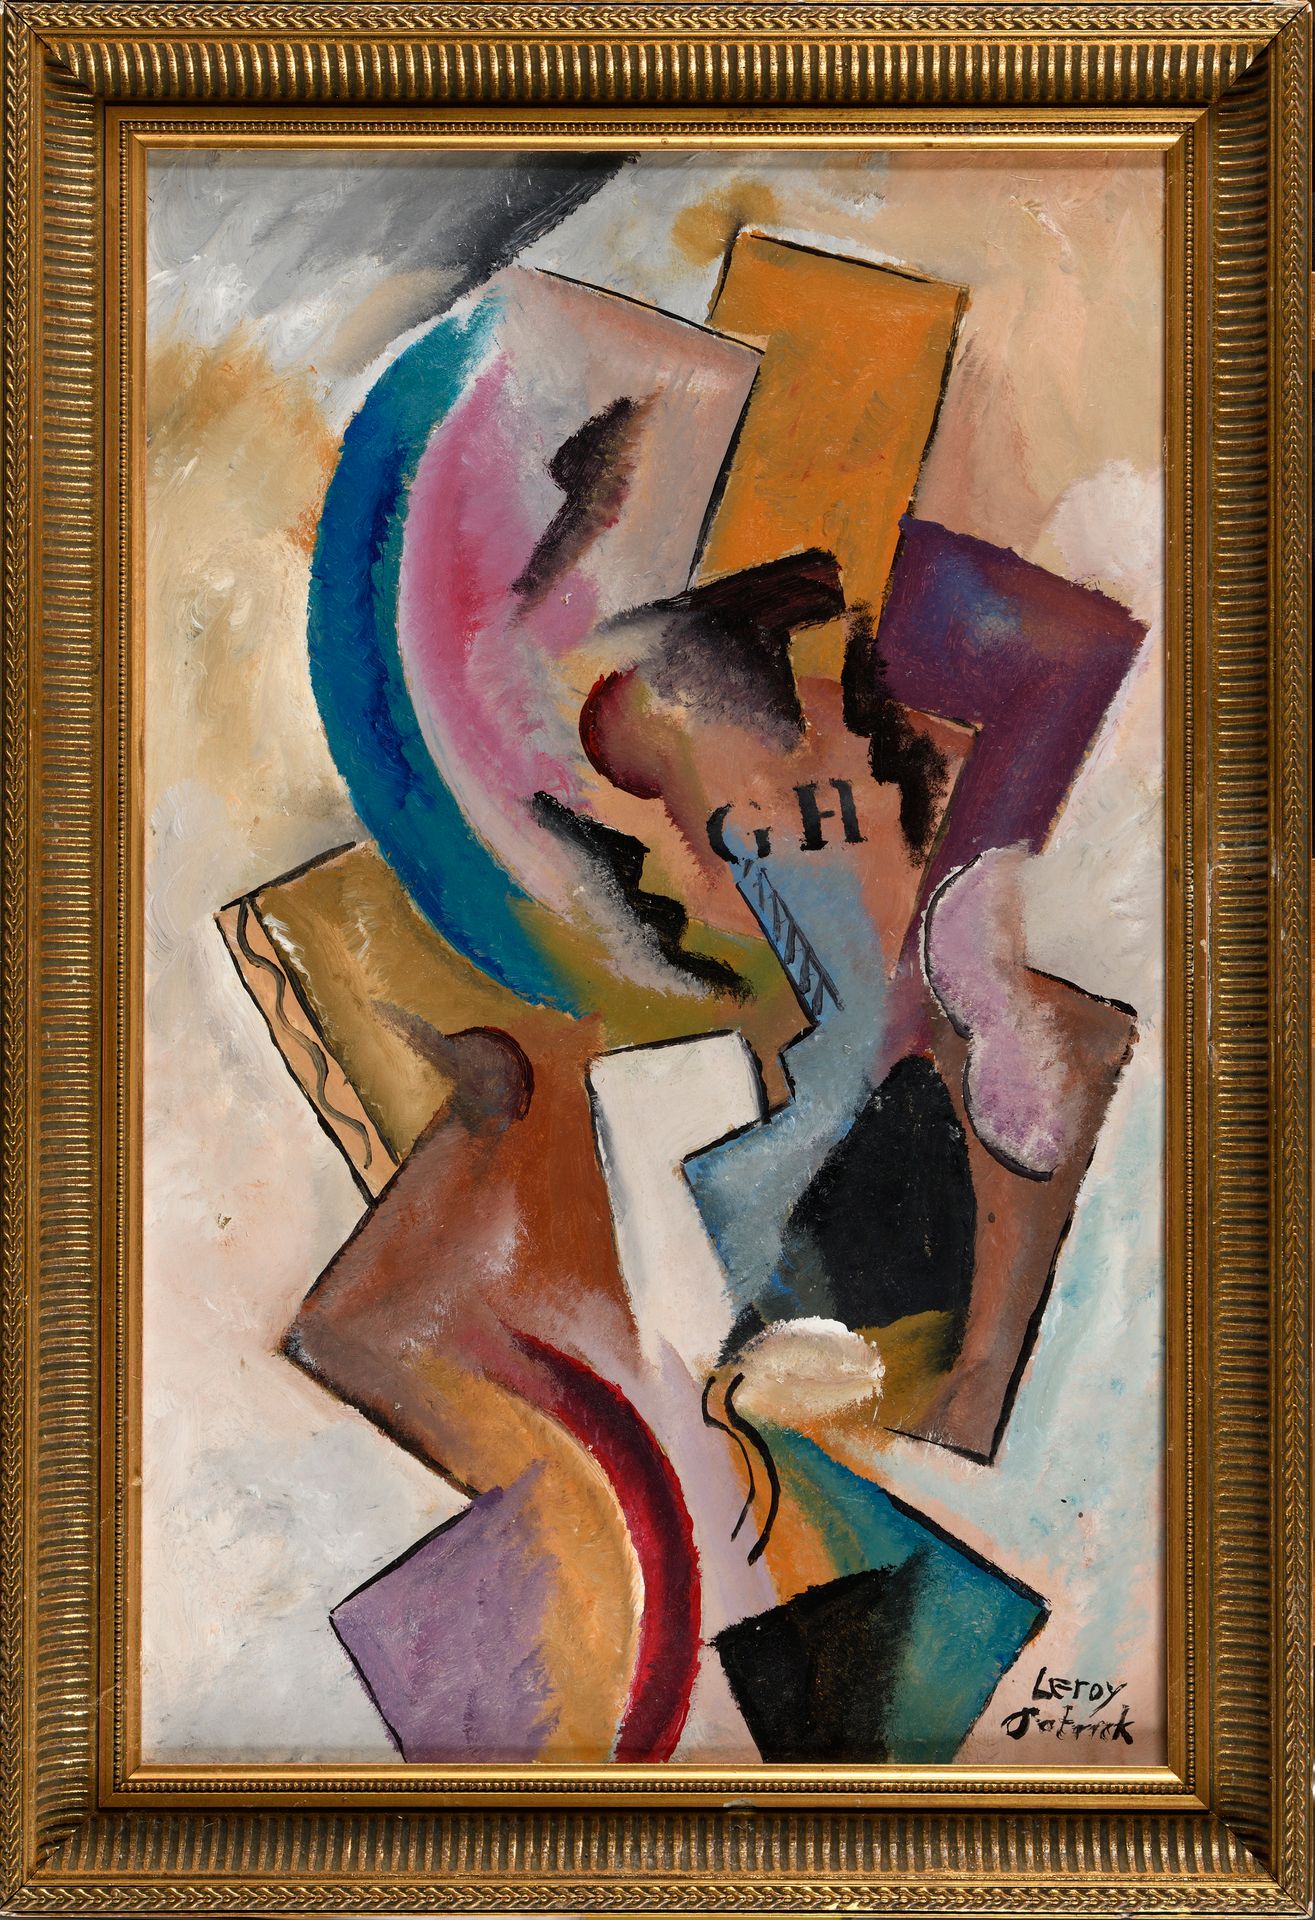 Null PATRICK LEROY (1948年生) 立体派作品 "GH "面板油画 右下方签名 63 x 40 cm